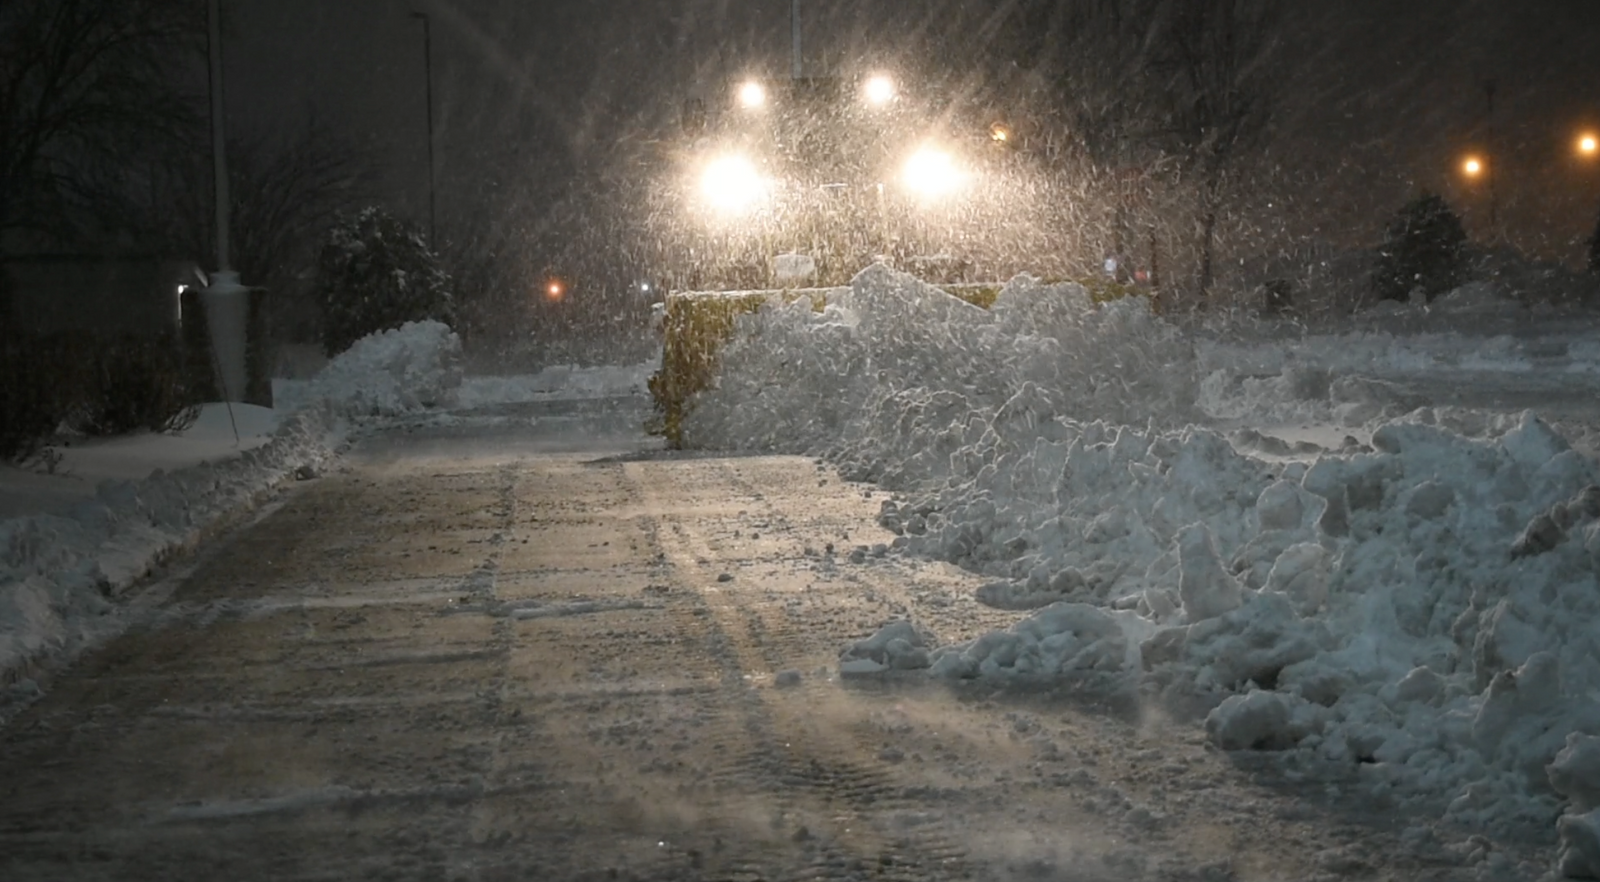 Metal Pless snow plow plowing snow at night